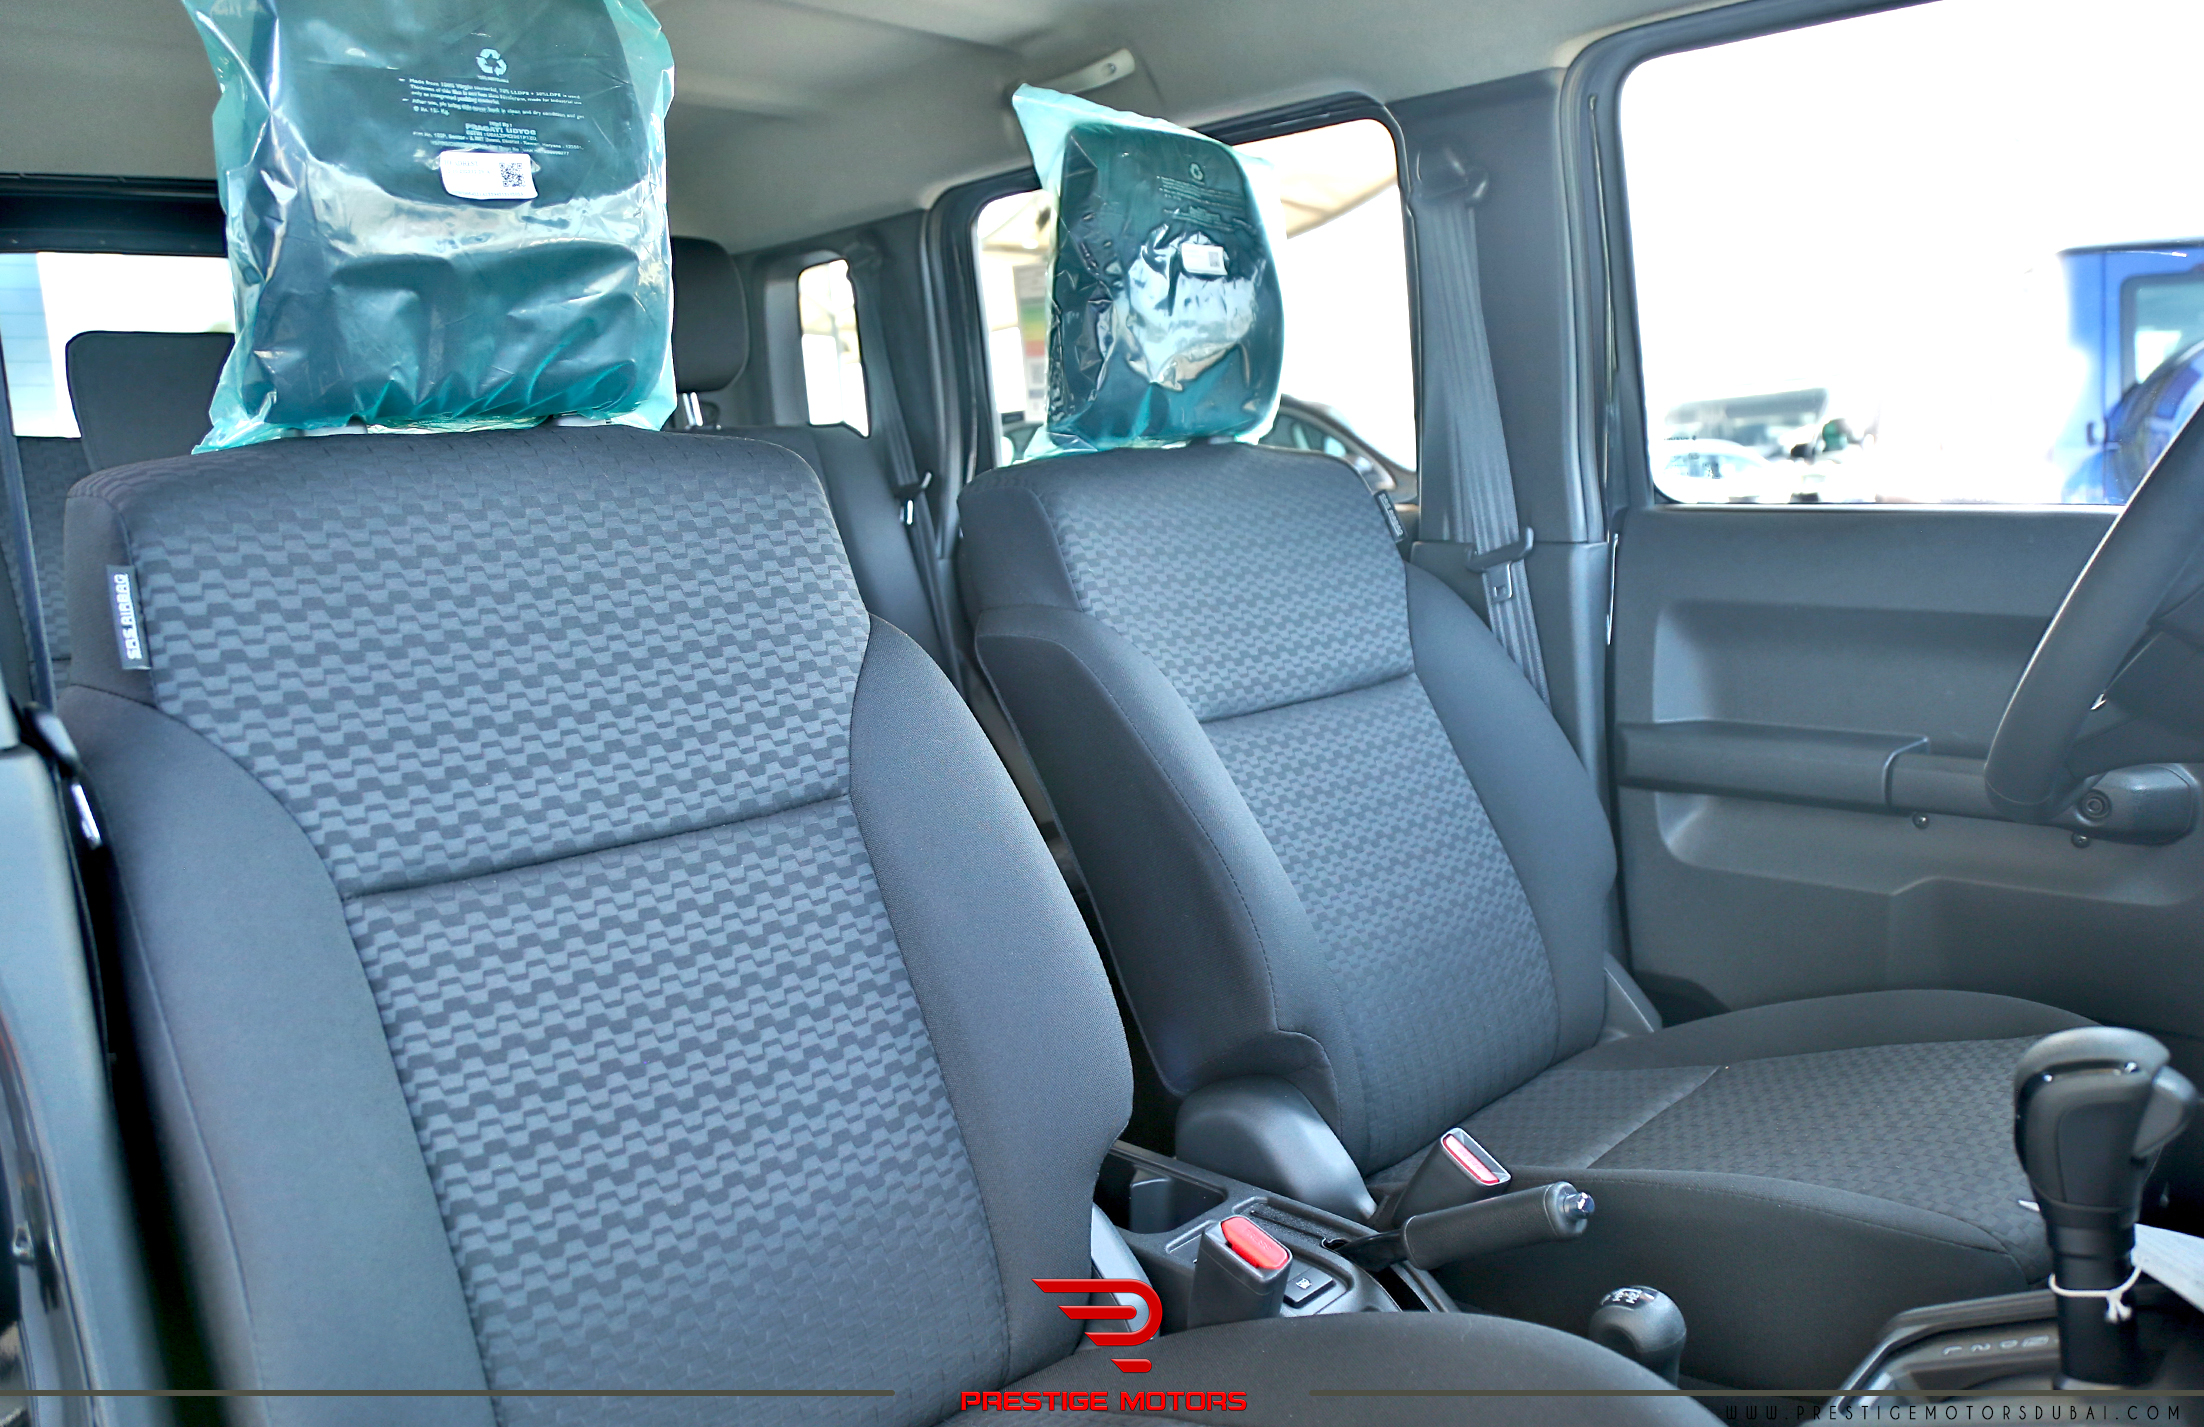 Suzuki Jimny GLX 2024 4WD 5Doors. Open km or 7 years Warranty. Local Registration + 5% Prestige Motor Dubai